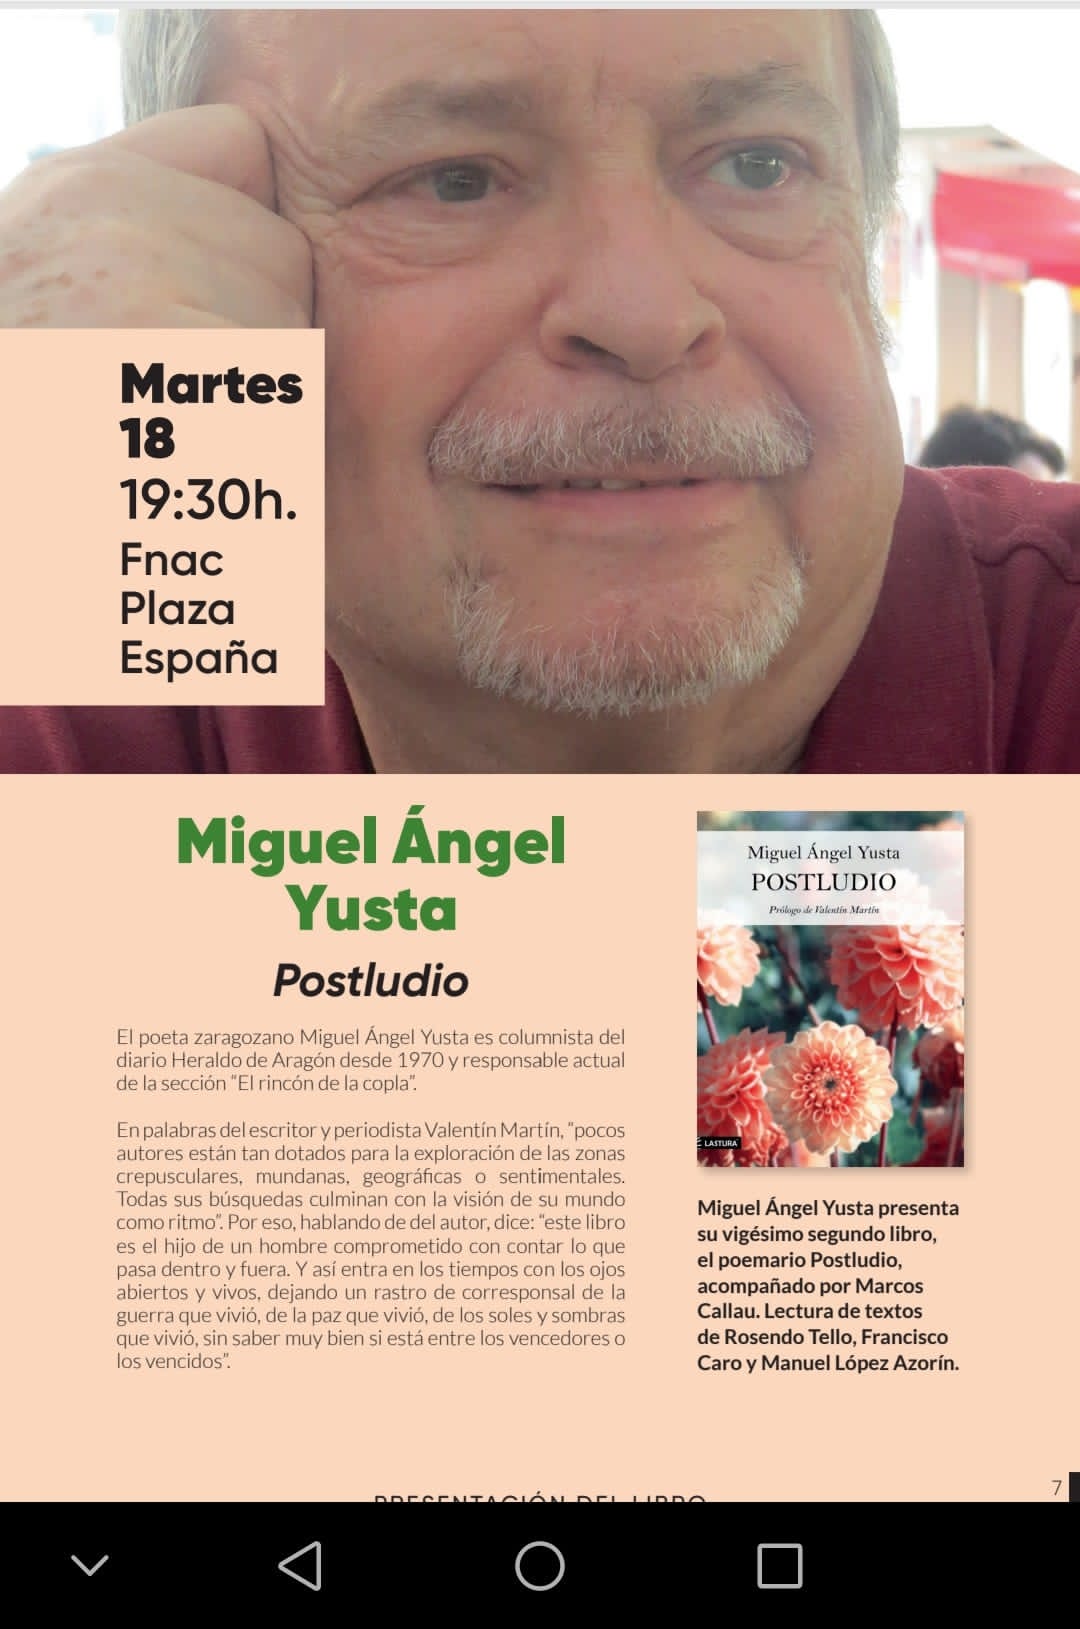 Miguel Ángel Yusta presenta “Postludio”